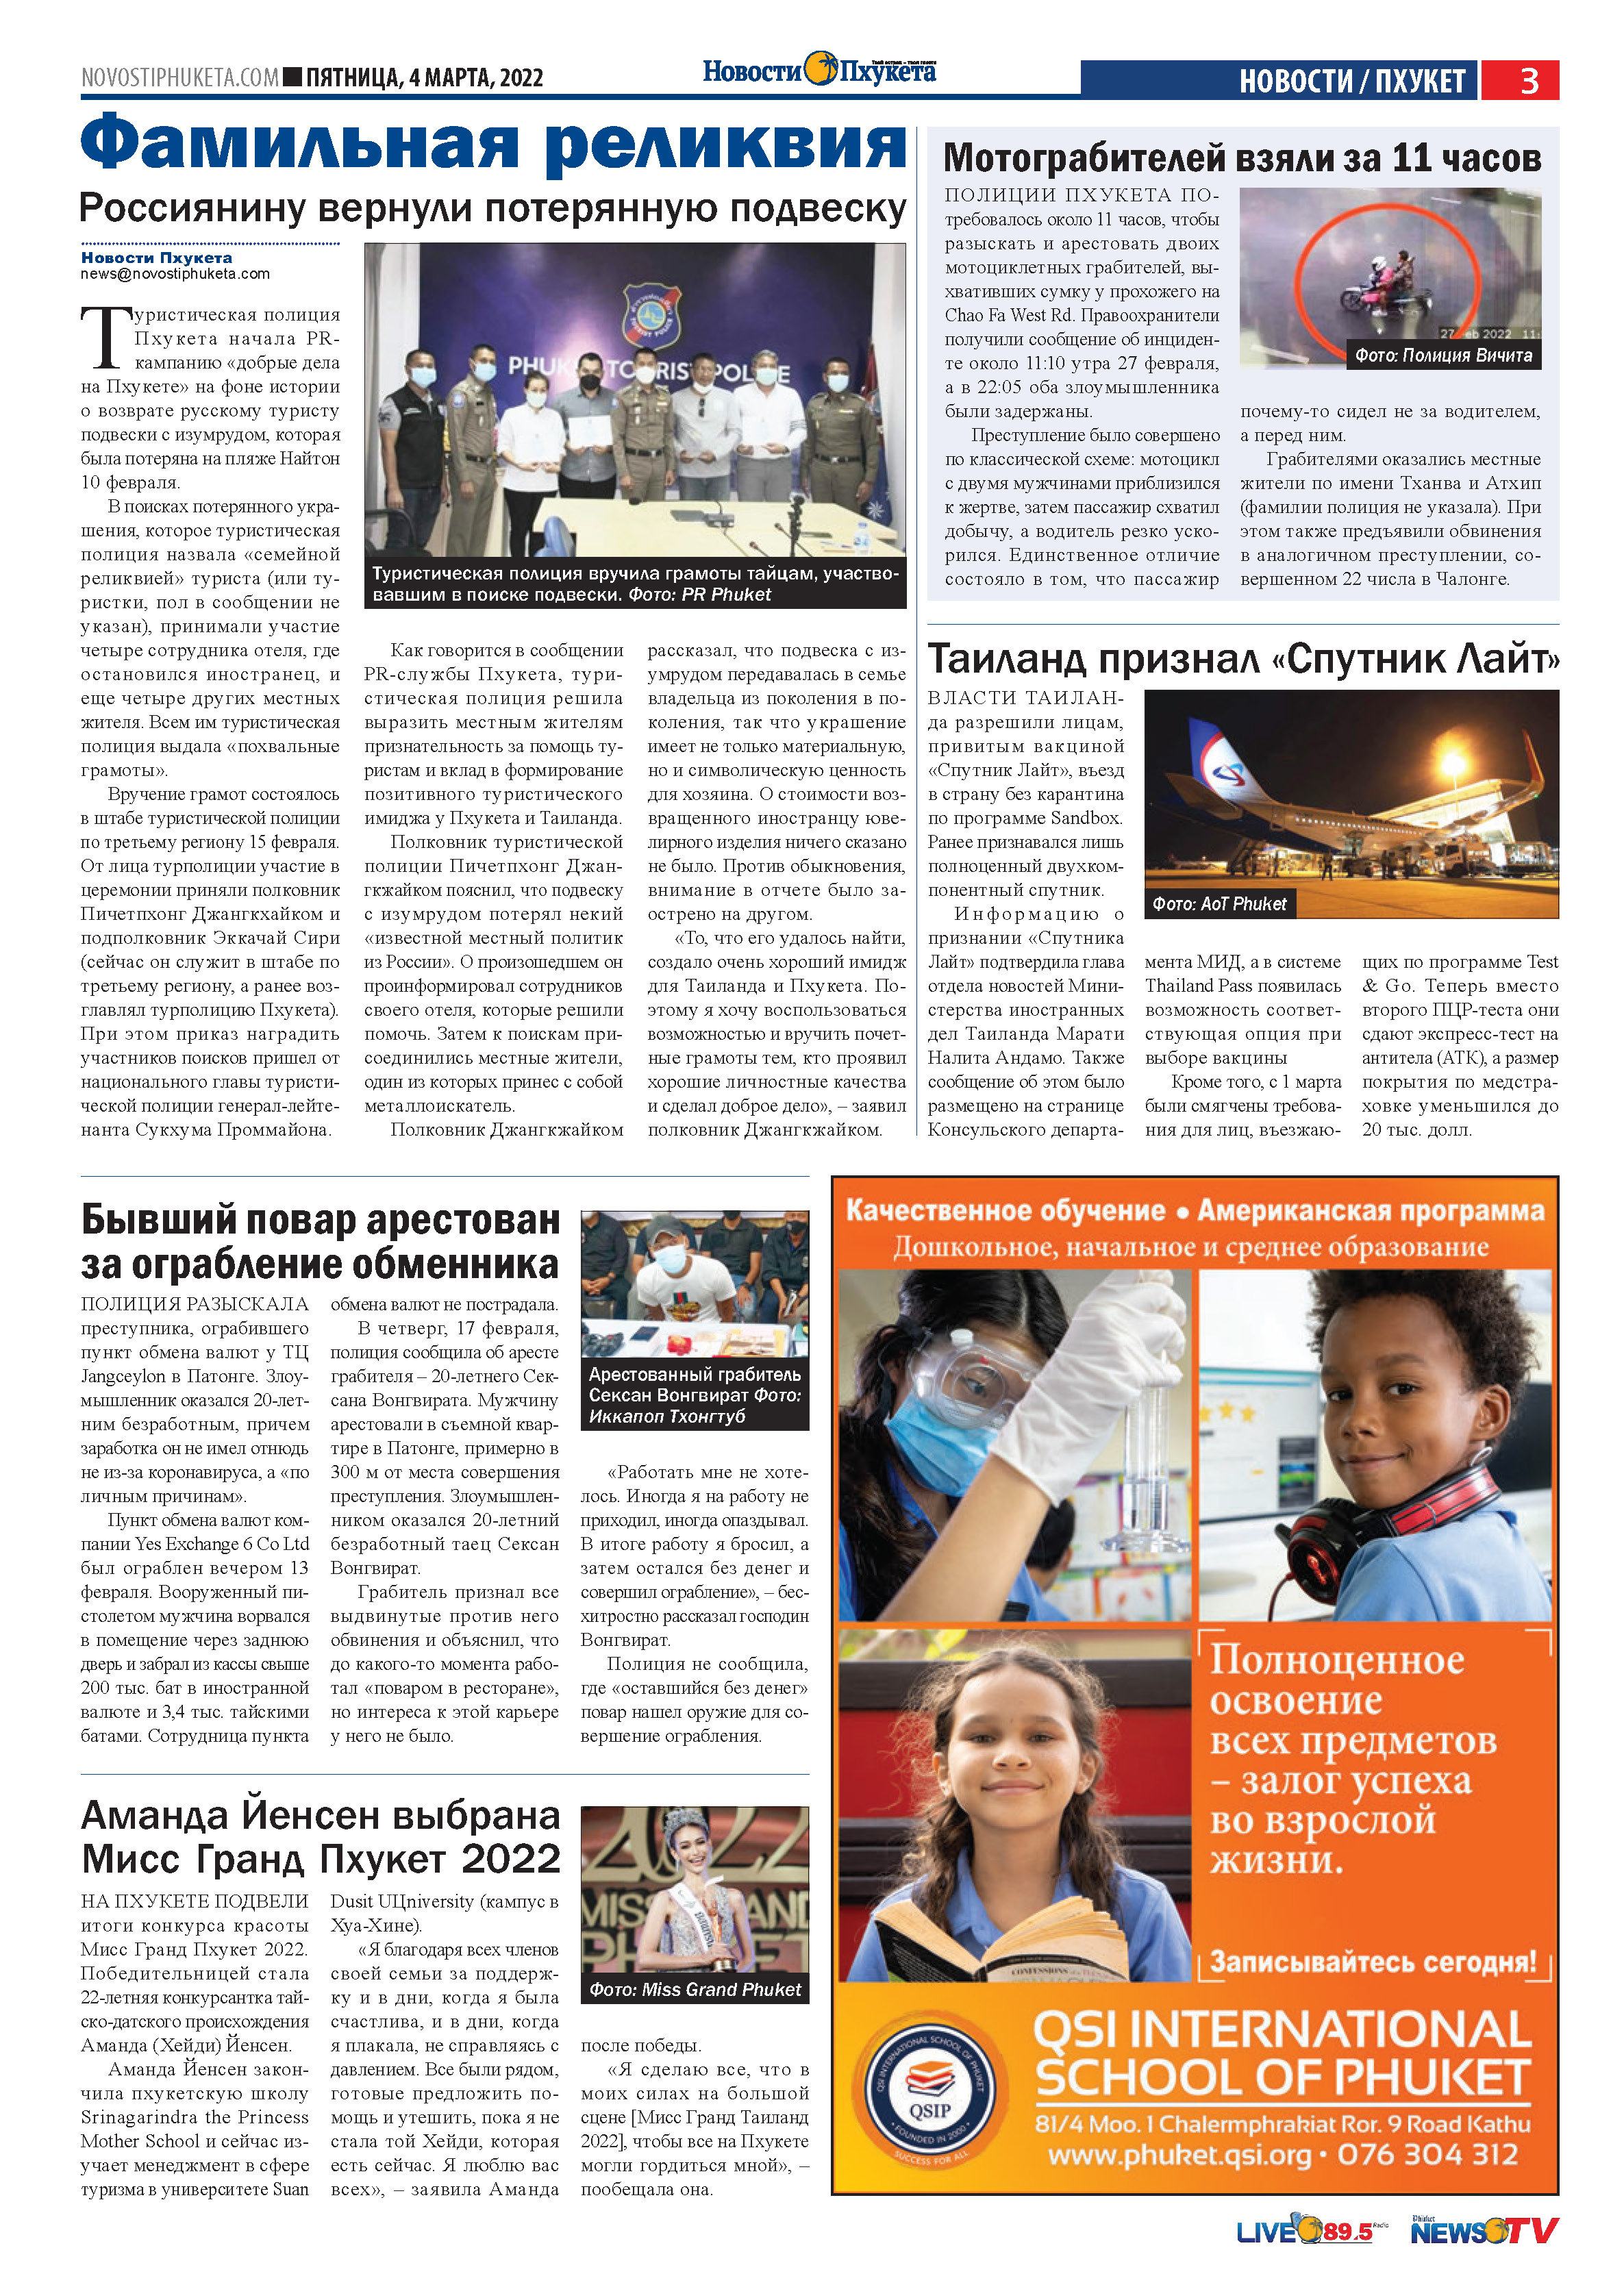 Phuket Newspaper - https://www.novostiphuketa.com/archive/04-03-2022/04-03-2022_Page_03.jpg